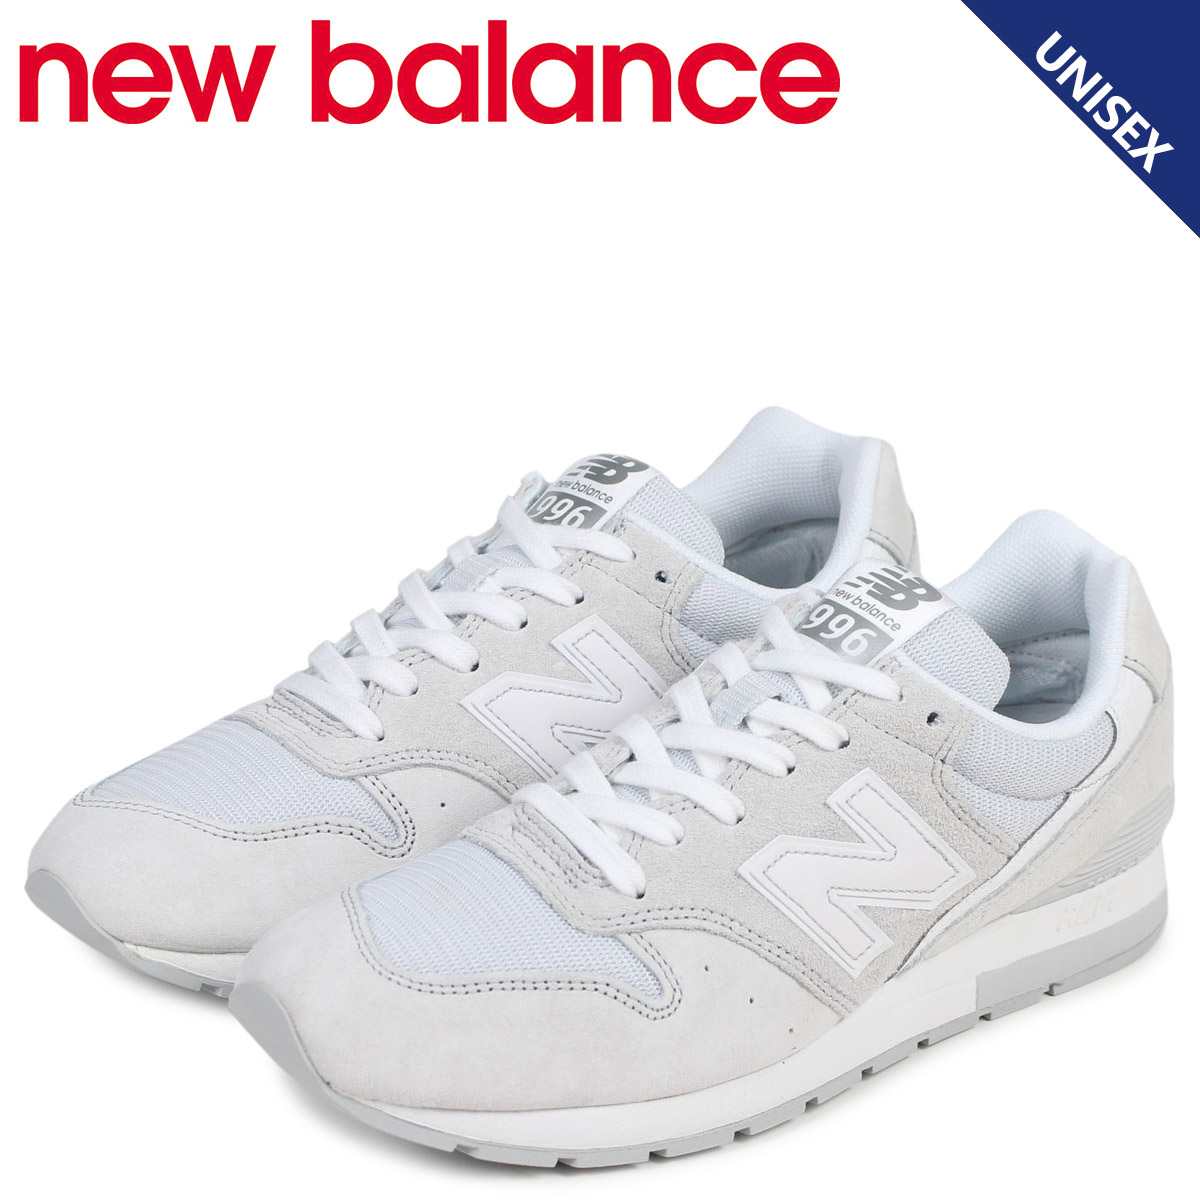 new balance 996 buy online